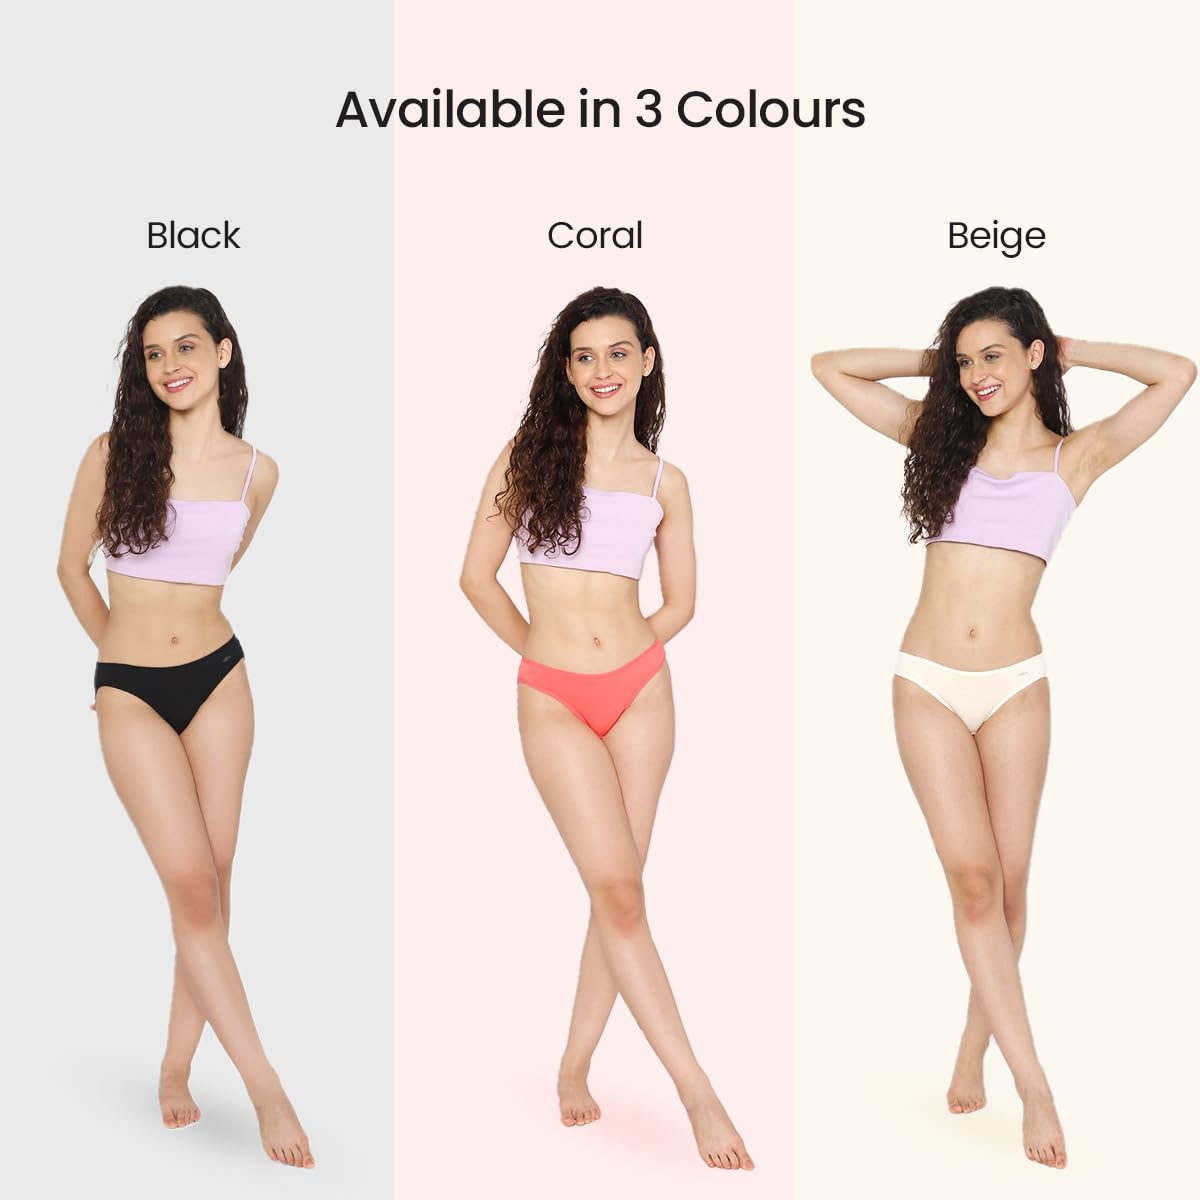 Mush Womens Ultra Soft Bamboo Modal Bikini Brief || Breathable Panties || Anti-Odor, Seamless, Anti Microbial Innerwear (XL - Pack of 3, Black Color)